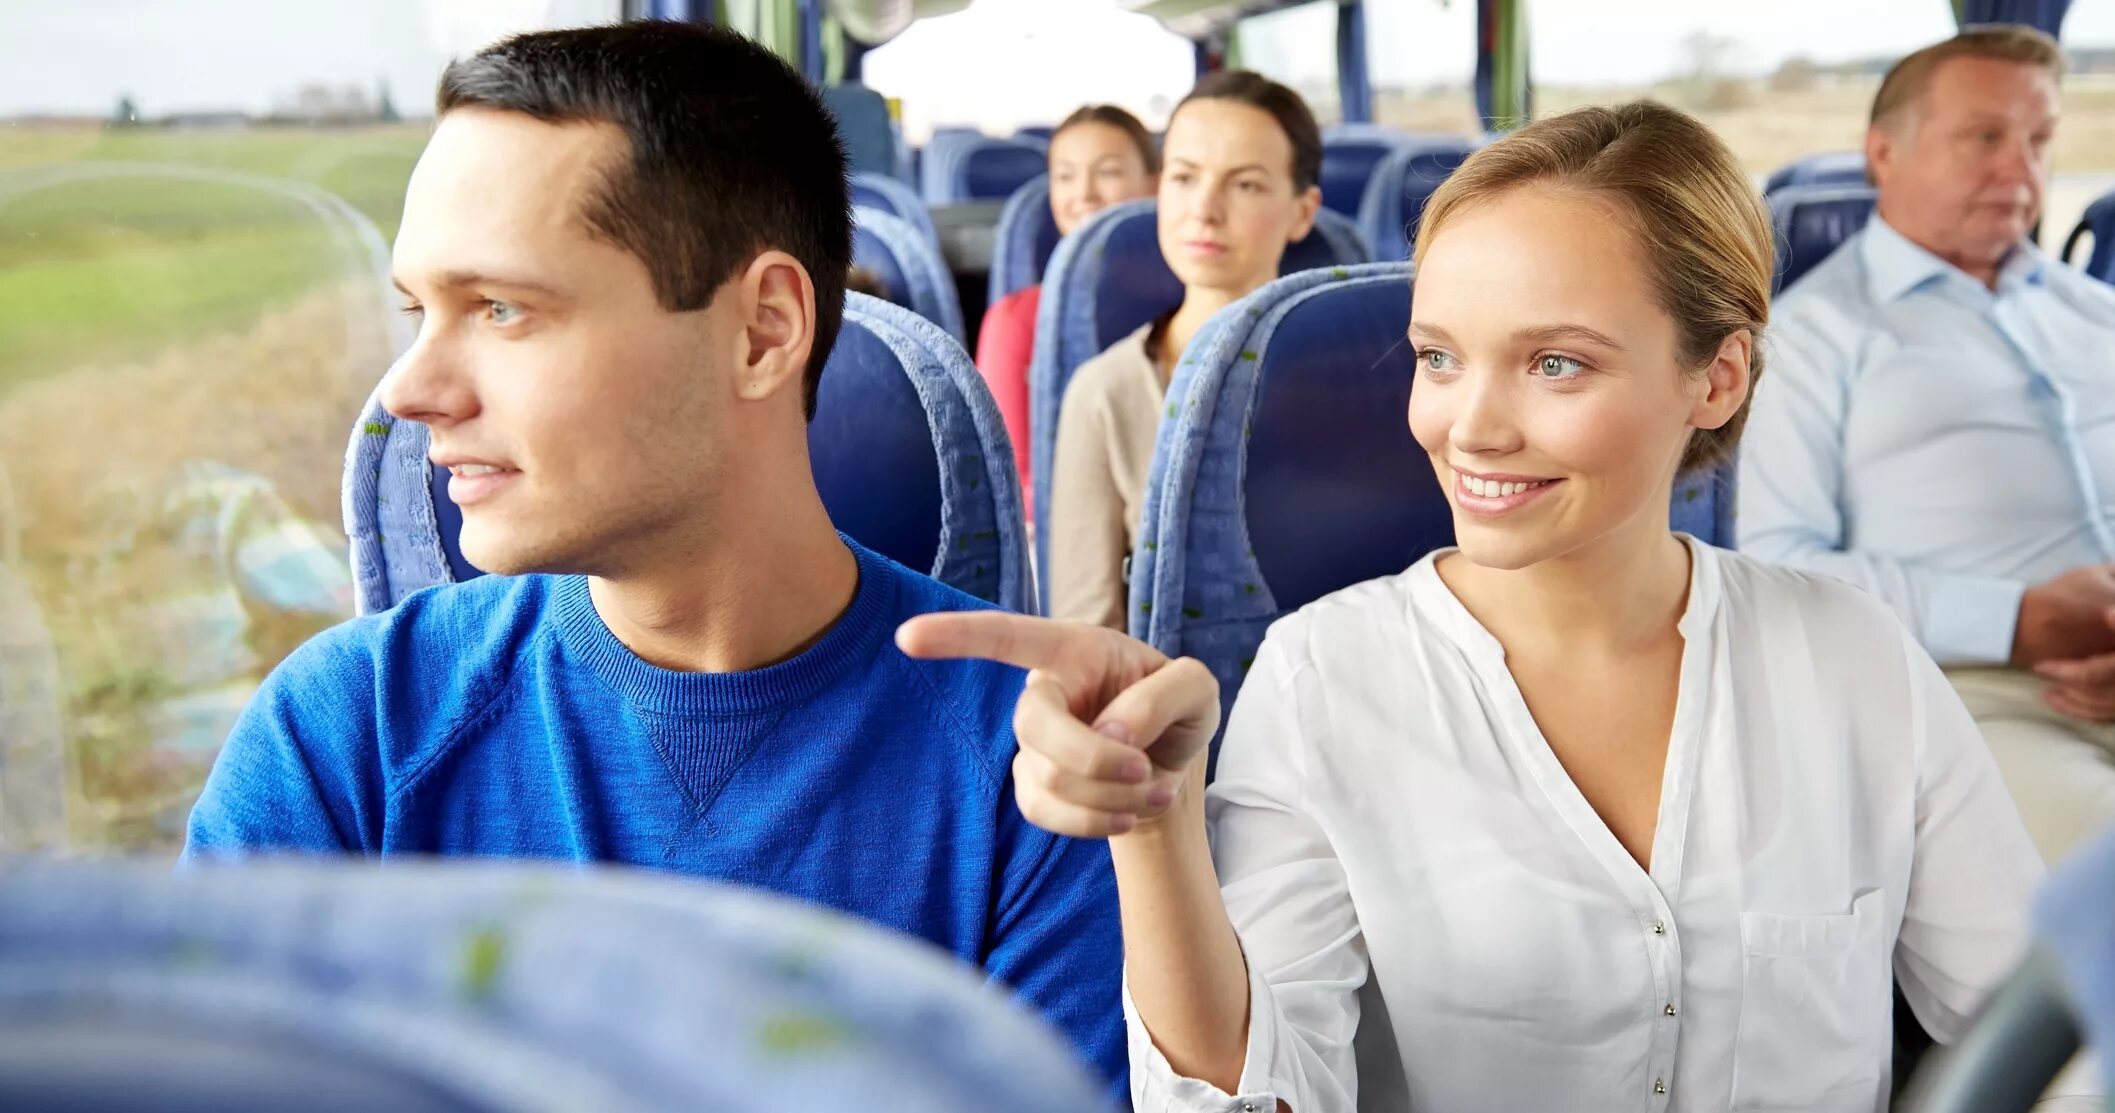 Пассажир или пасажир. Автобус турист. Люди в экскурсионном автобусе. Экскурсанты в автобусе. Экскурсия на автобусе.